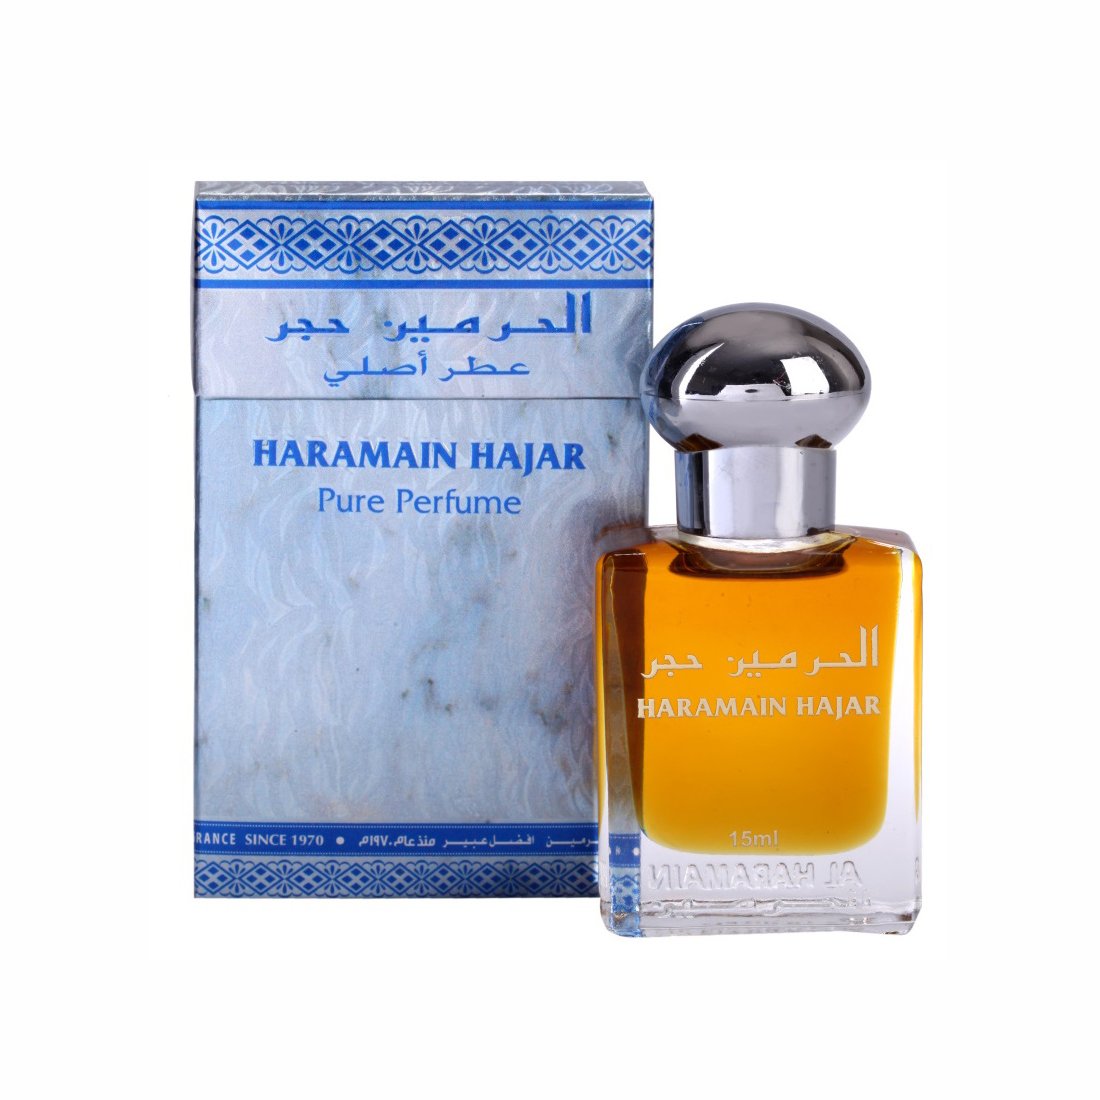 Al Haramain Firdous & Hajar Fragrance Pure Original Roll on Perfume Oil Pack of 2 (Attar) - 2 x 15 ml